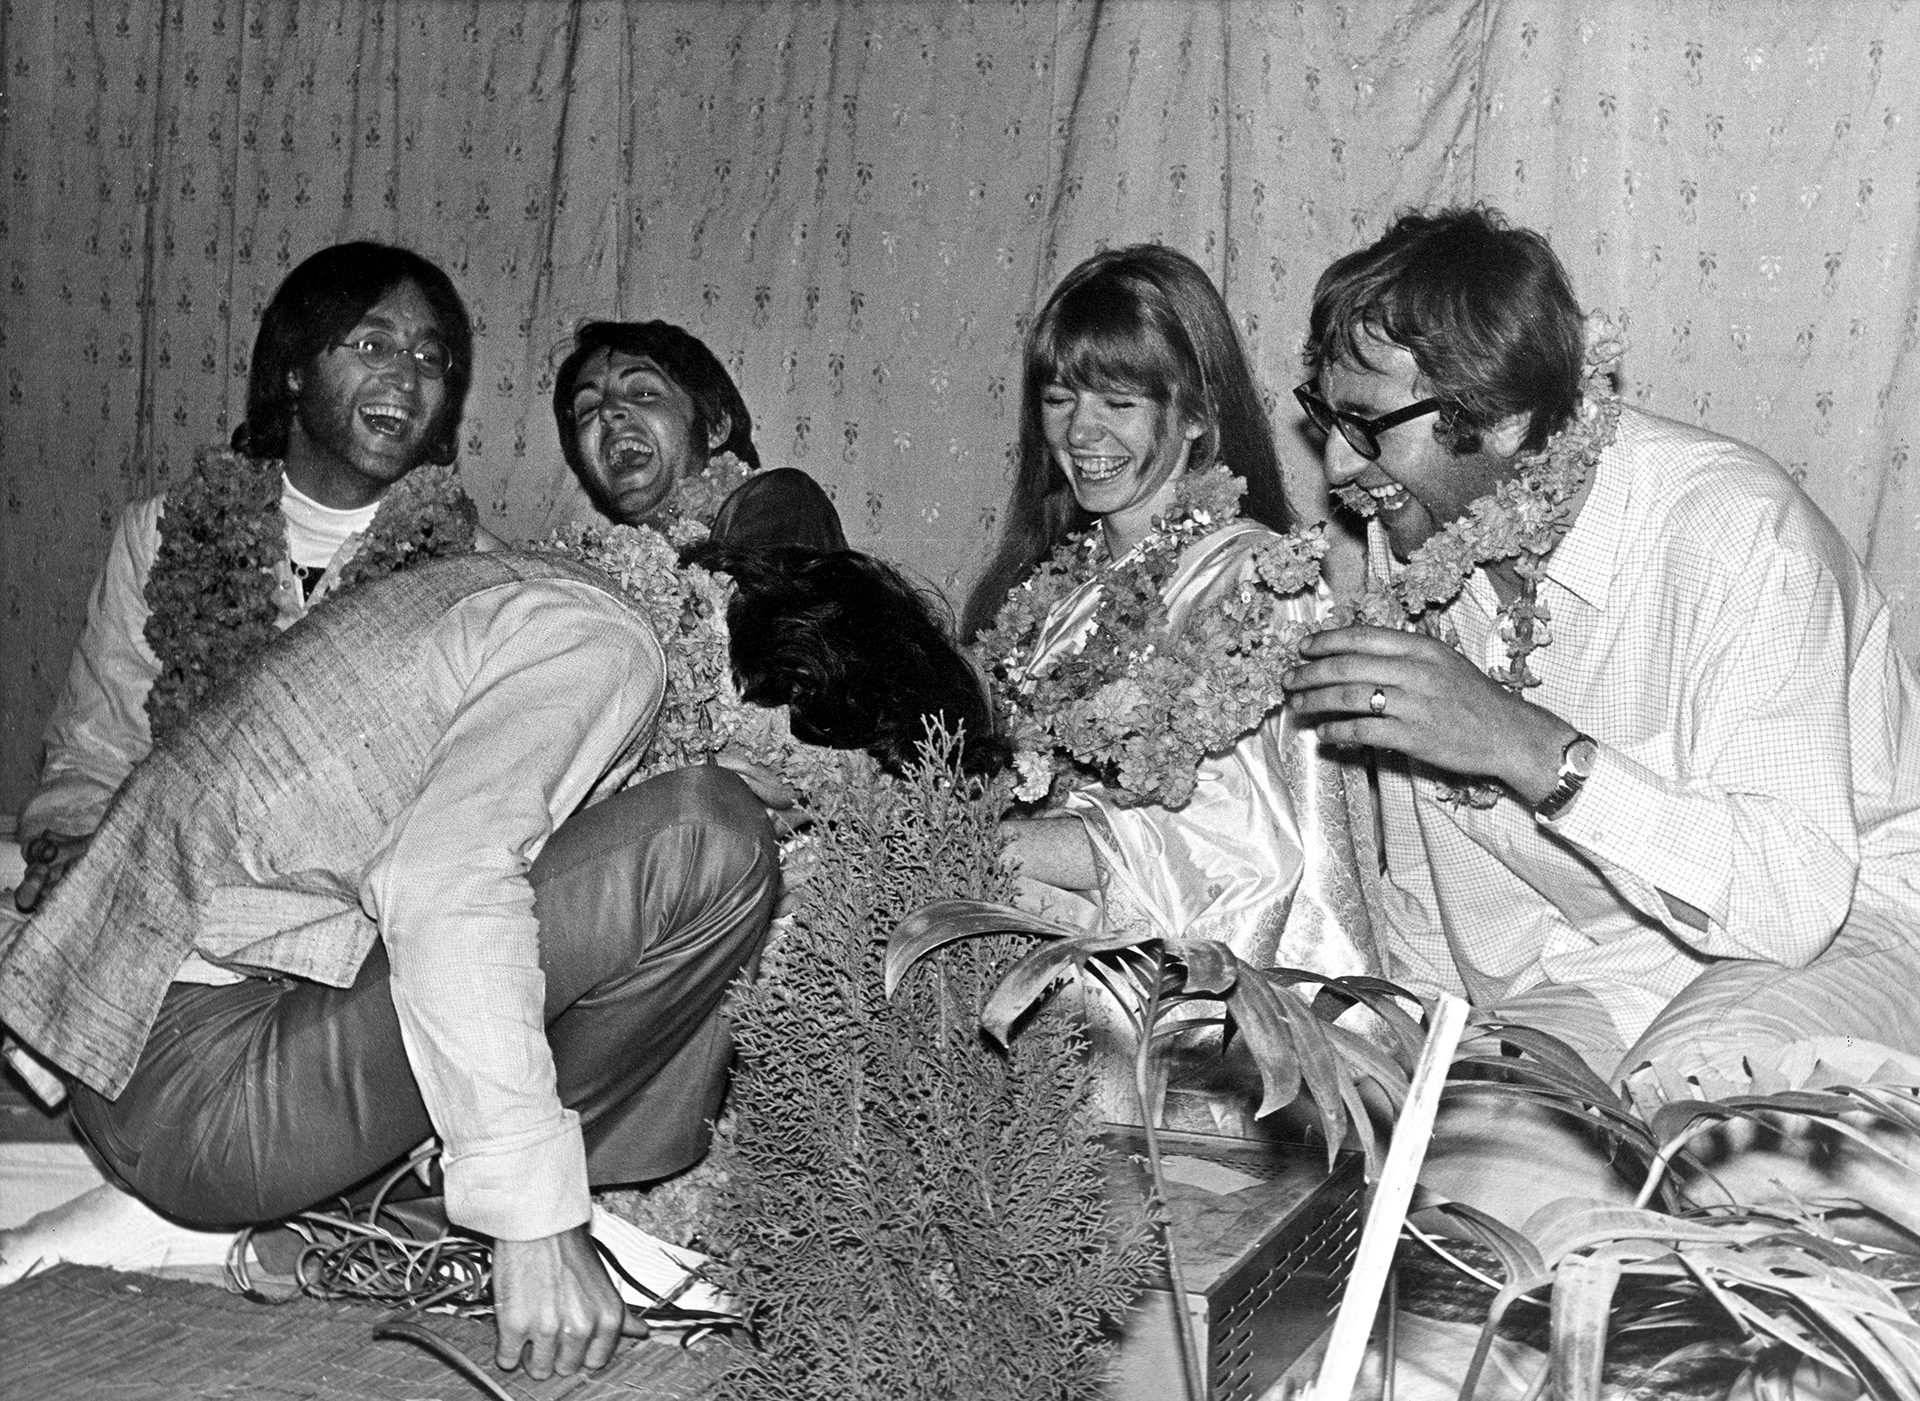 John Lennon, Paul McCartney, George Harrison, junto a Jane Asher y Mal Evans celebran los 25 años de George en Rishikesh, India (Cummings Archives/Redferns)